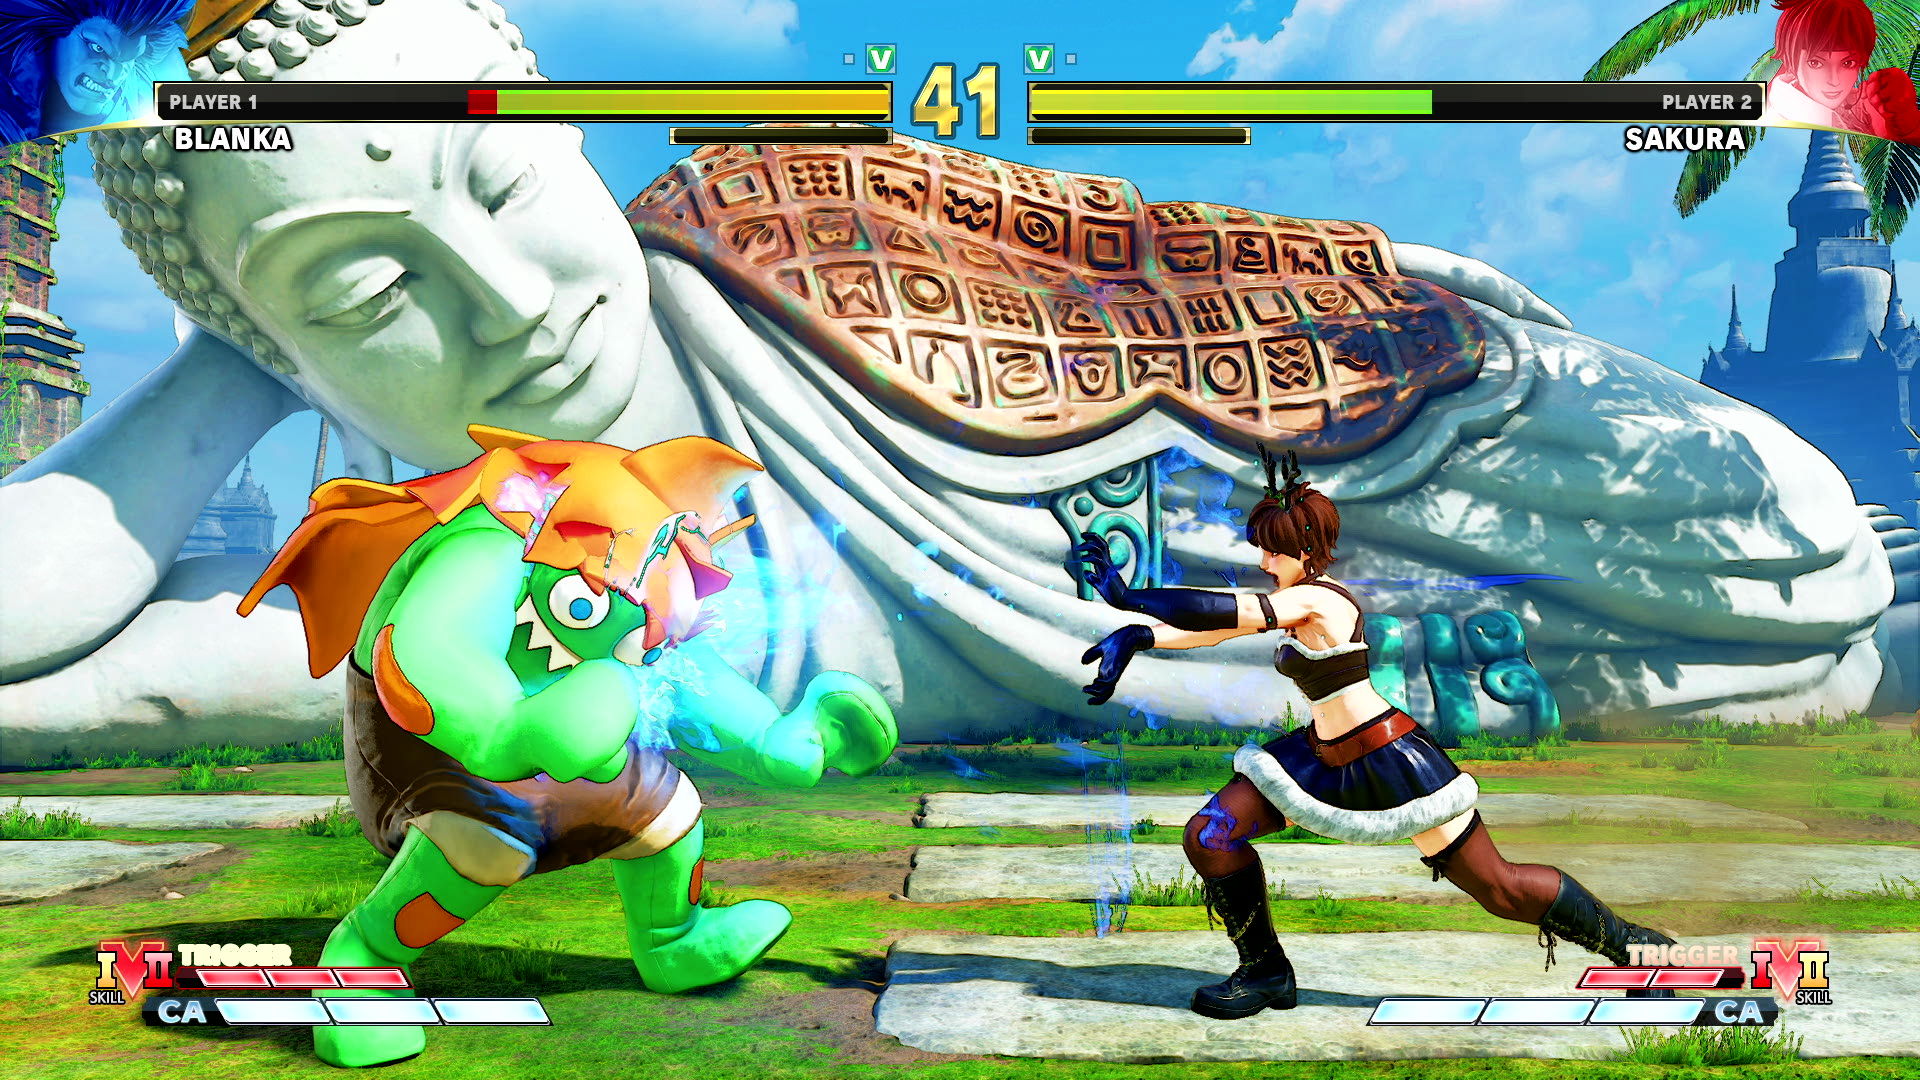 Street Fighter V: Champion Edition Legends Now Live on Gamefound